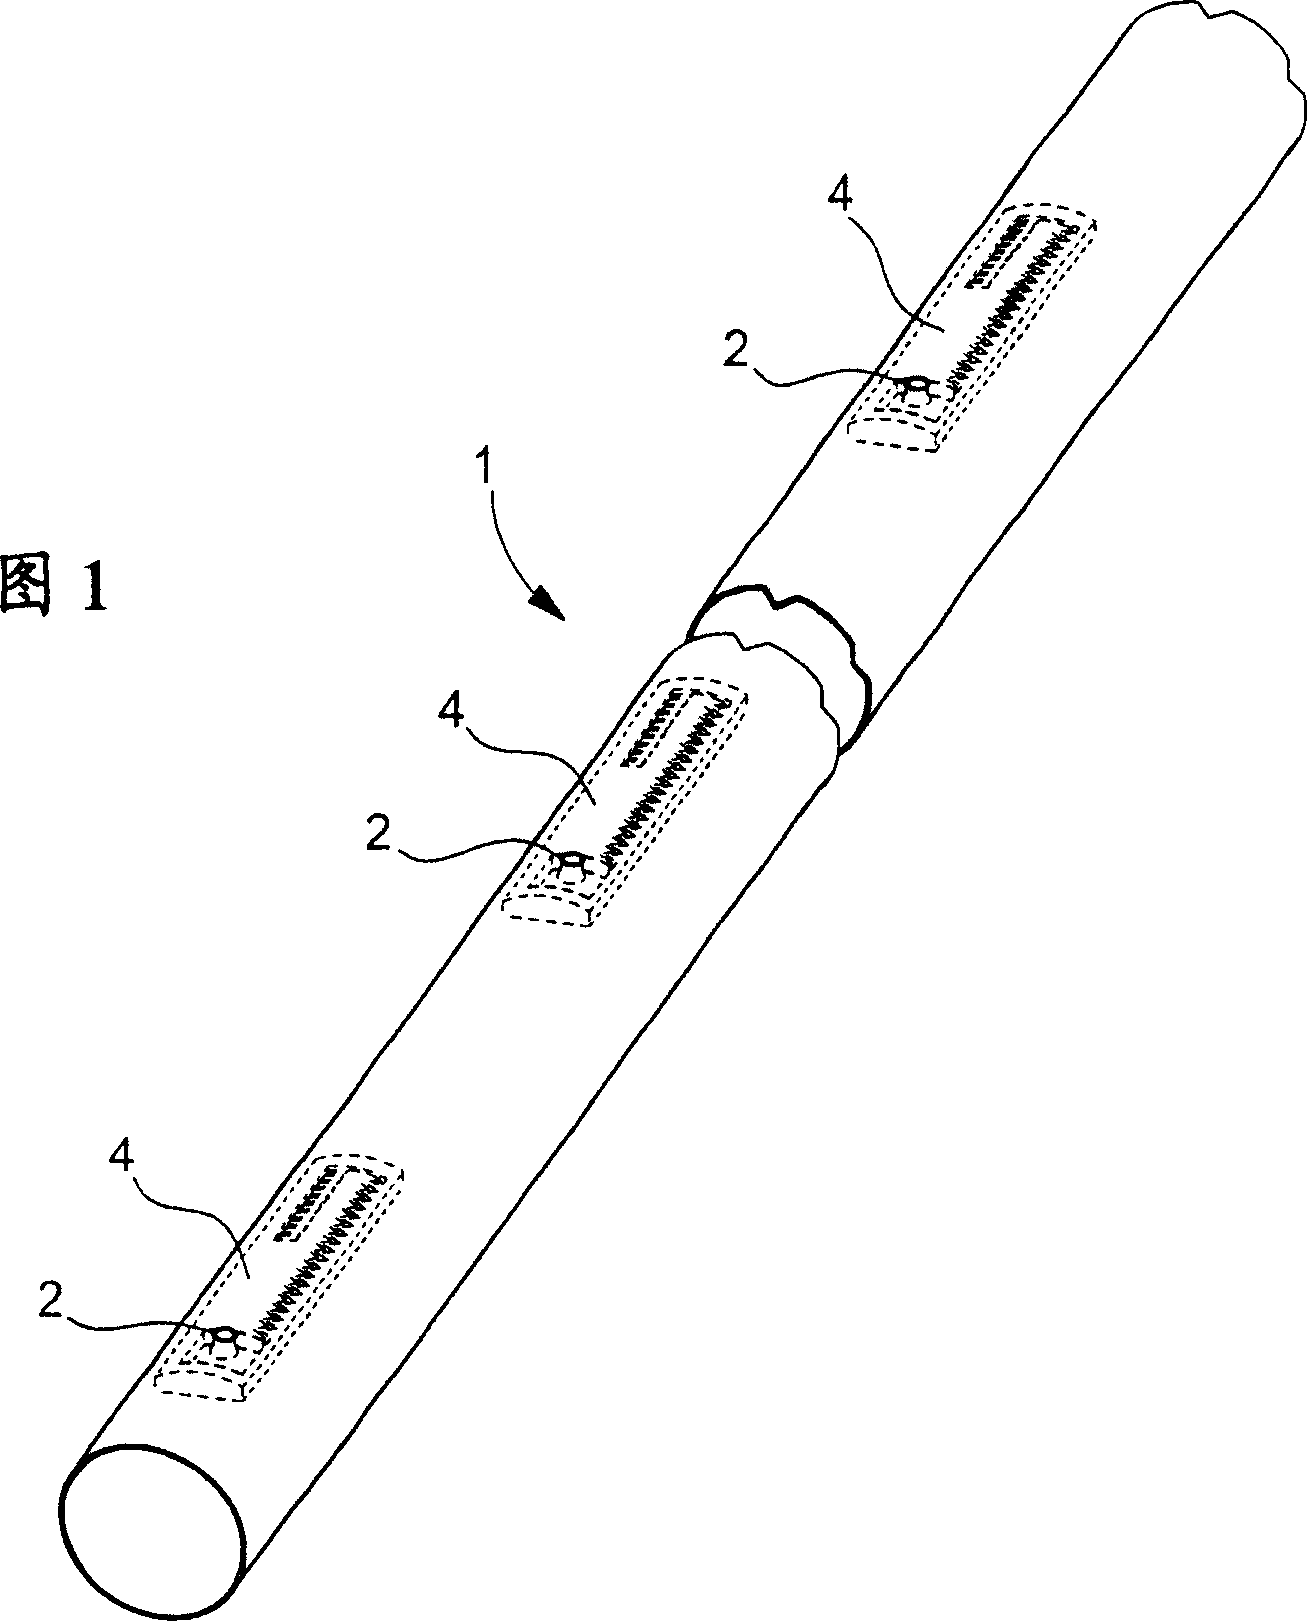 Method of fabrication of drip irrigation conduits